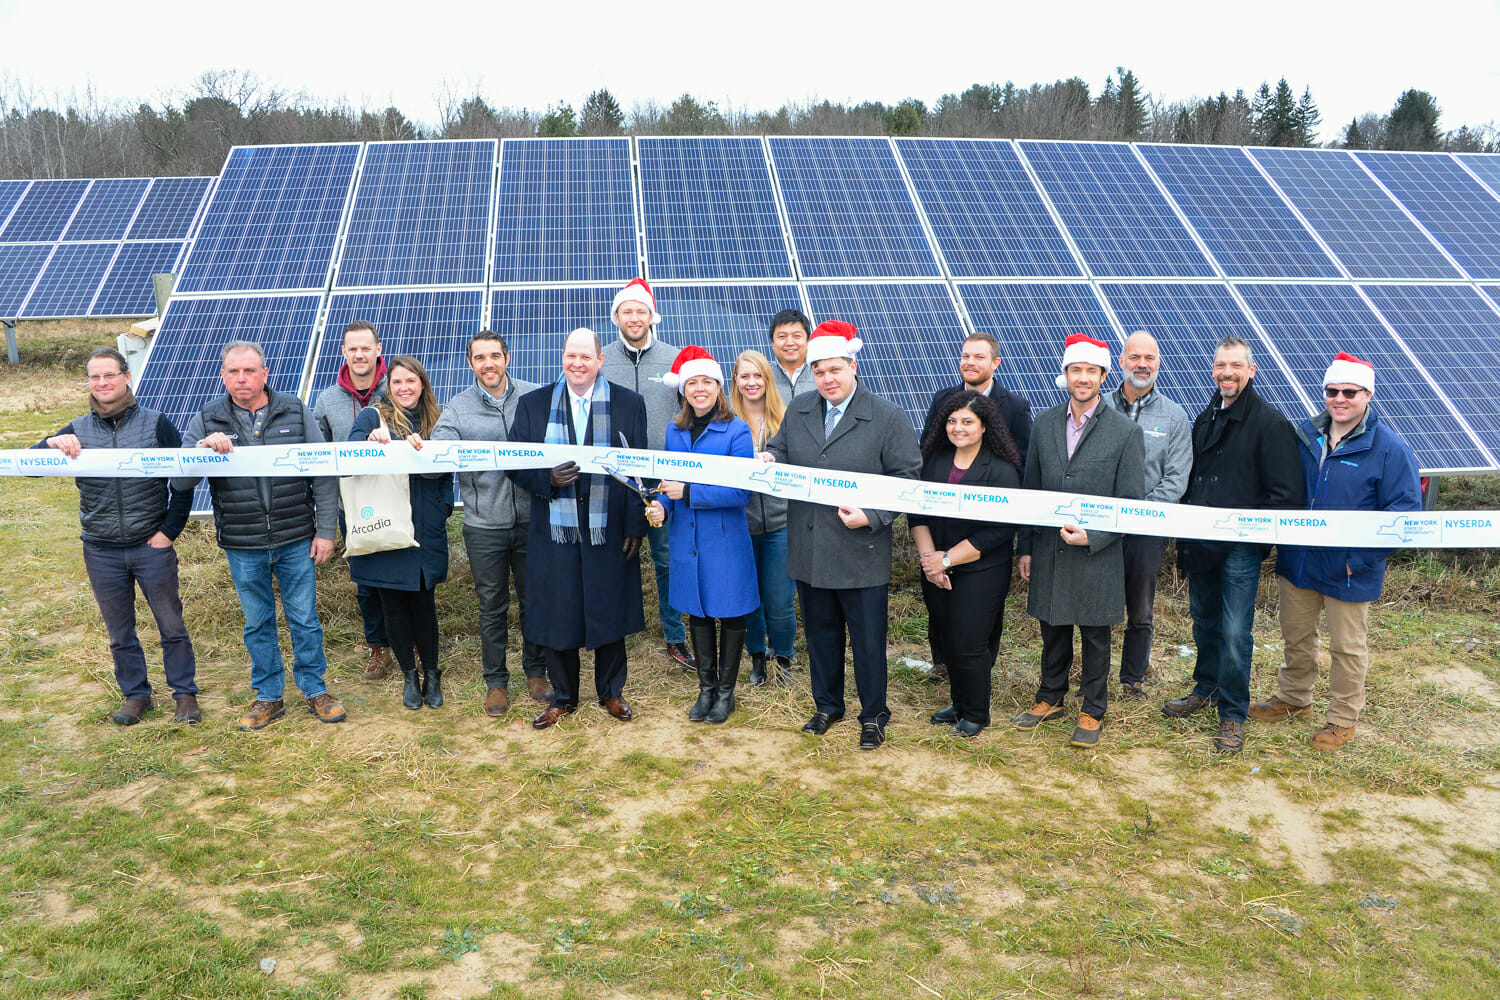 nyserda-announces-milestone-of-two-gigawatts-of-solar-capacity